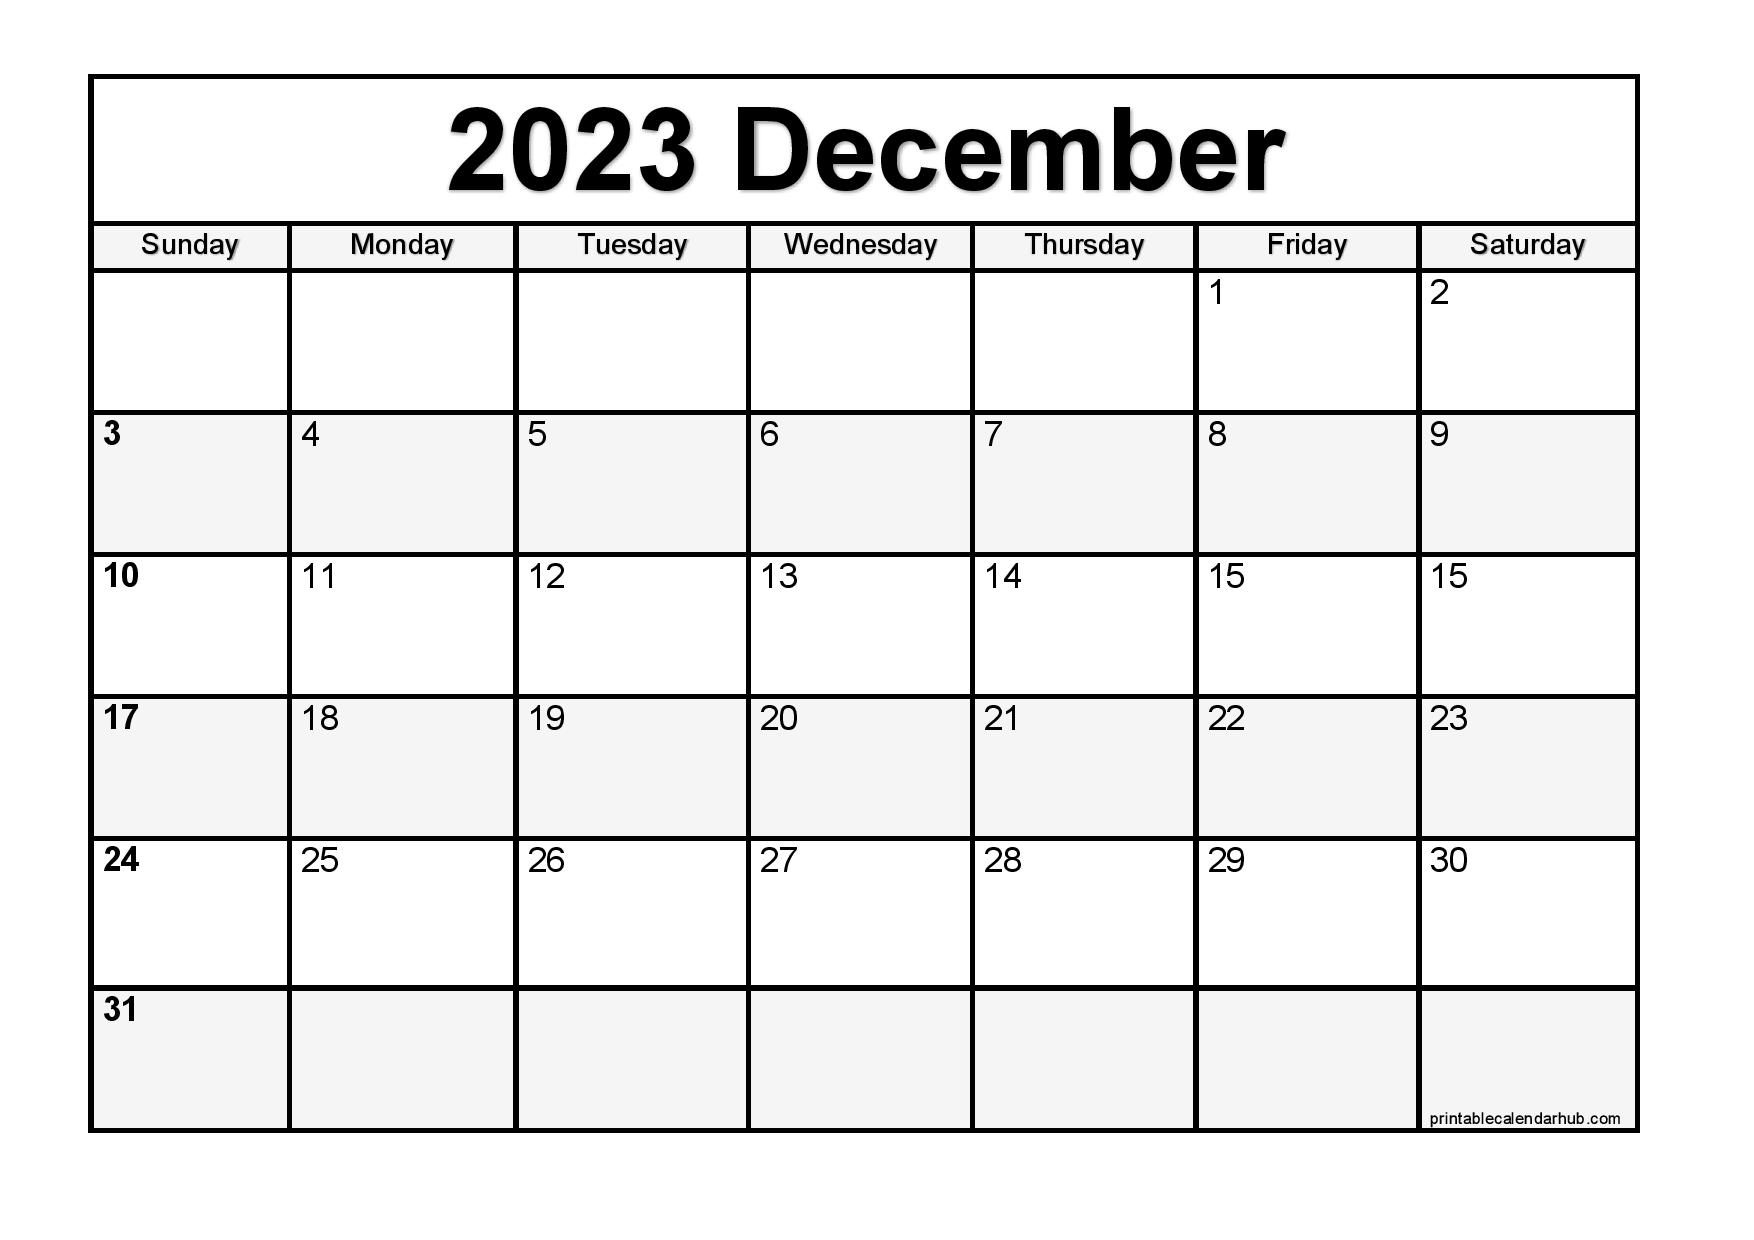 december-2023-printable-calendar-calendar-quickly-download-printable